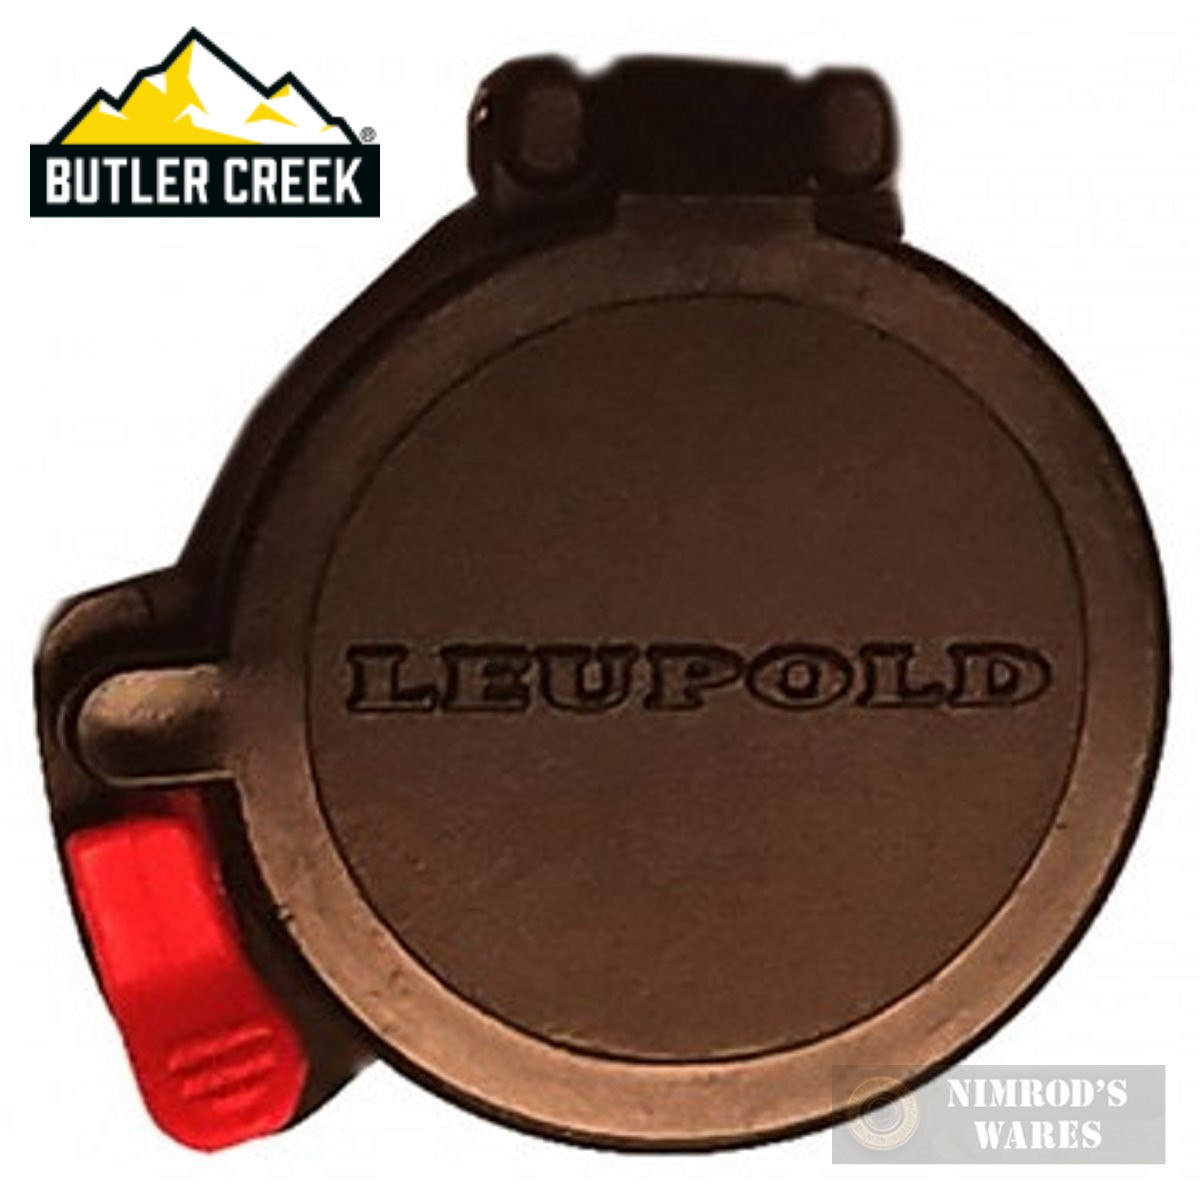 Butler Creek Scope Cover Chart Leupold